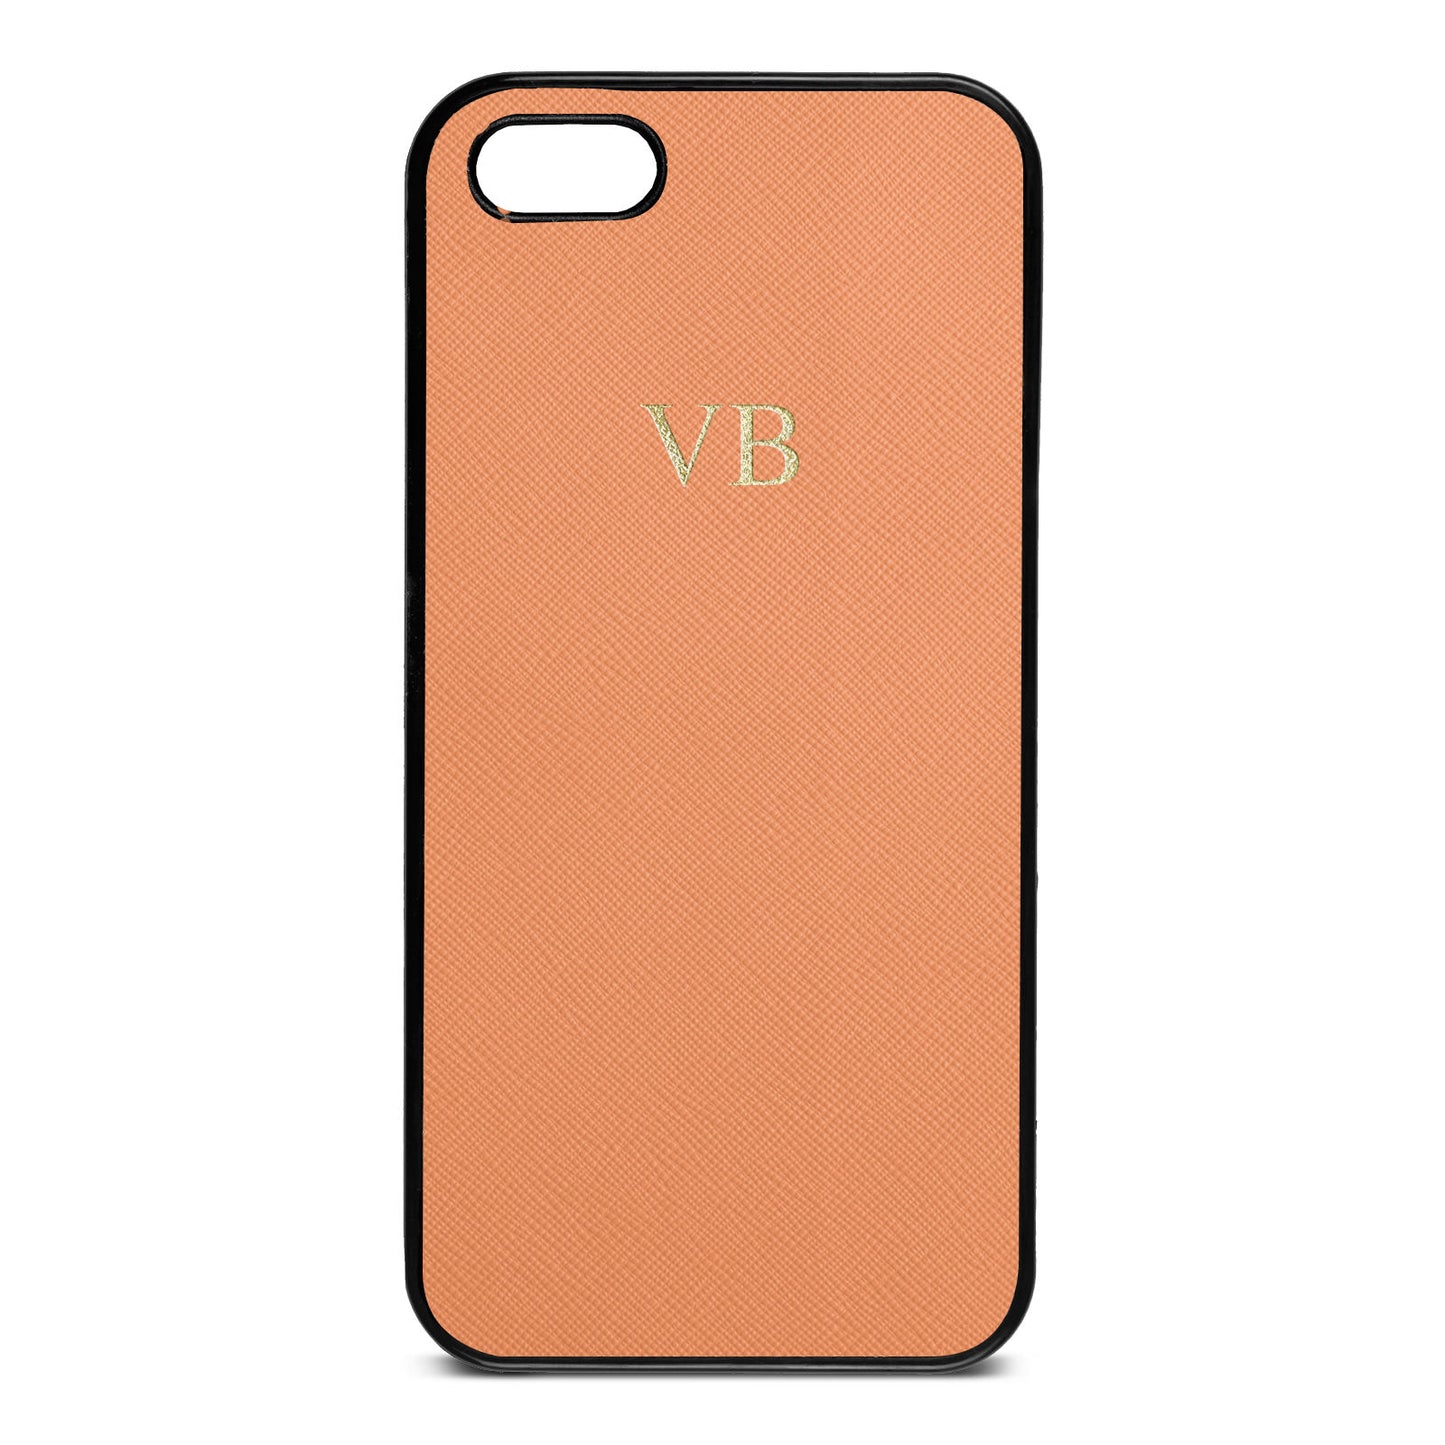 Personalised Orange Saffiano Leather iPhone 5 Case